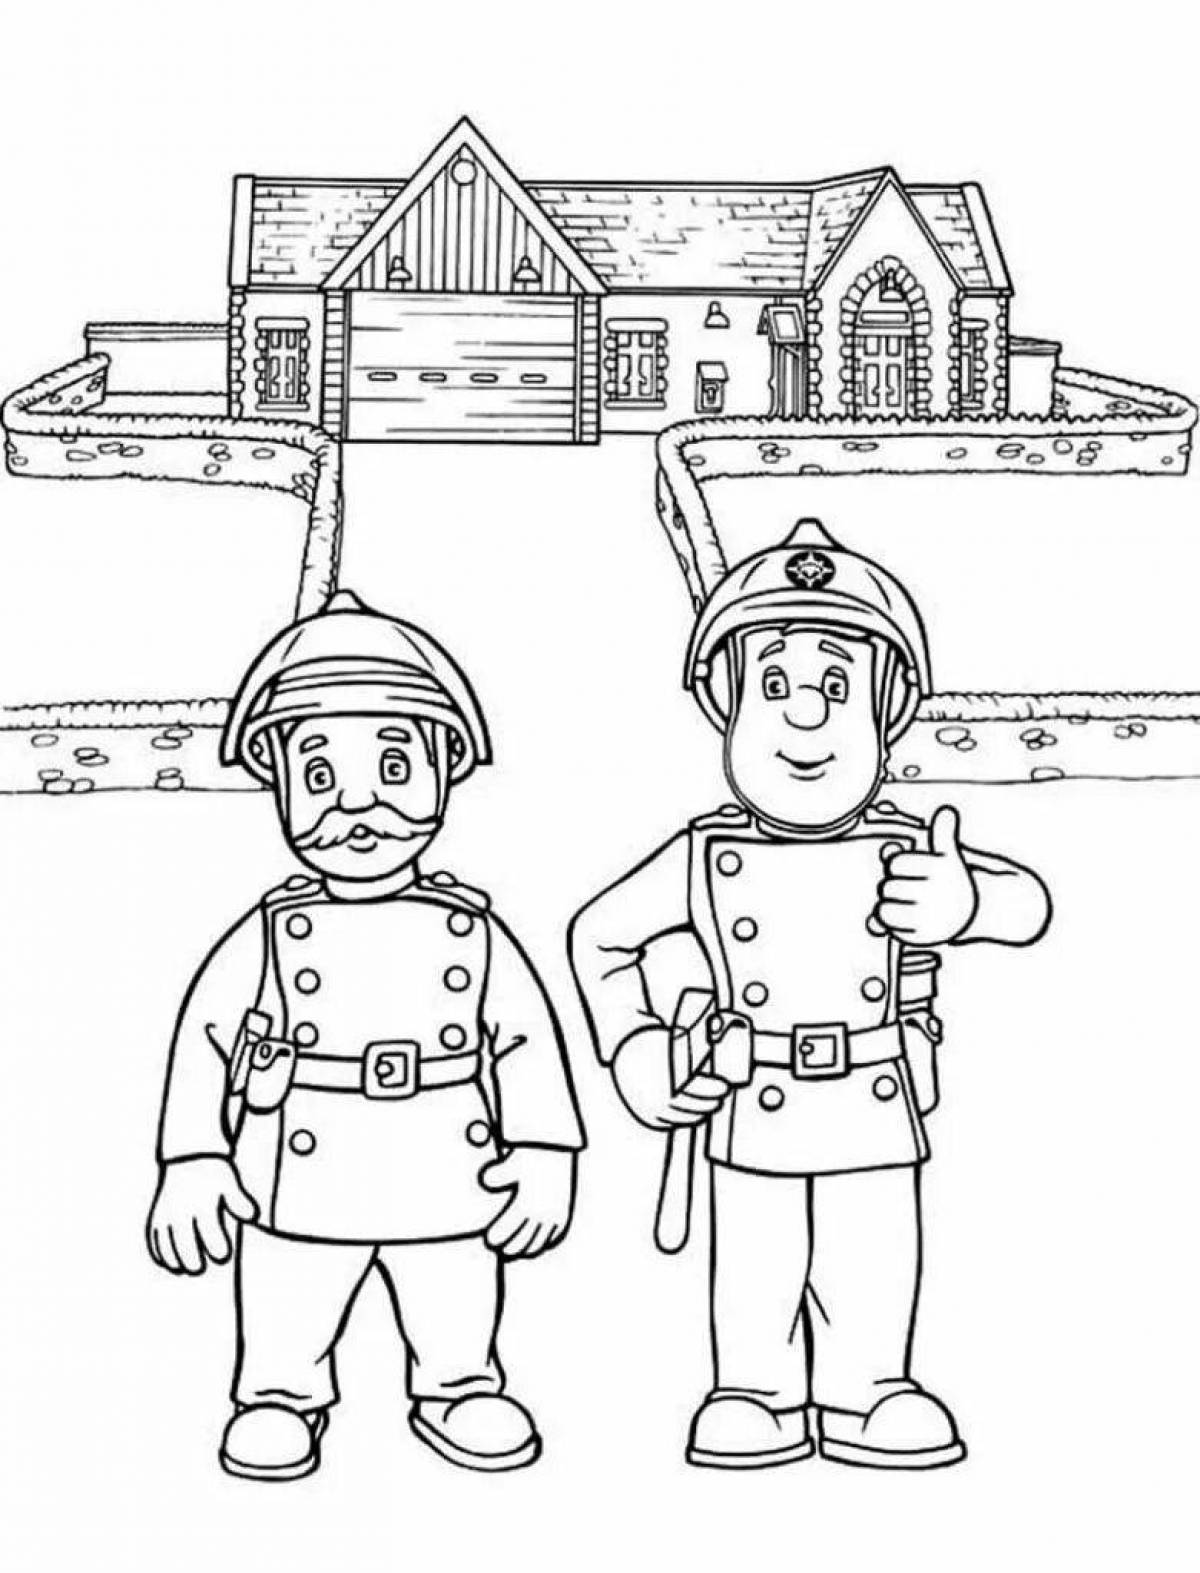 Cute fireman drawing for kids